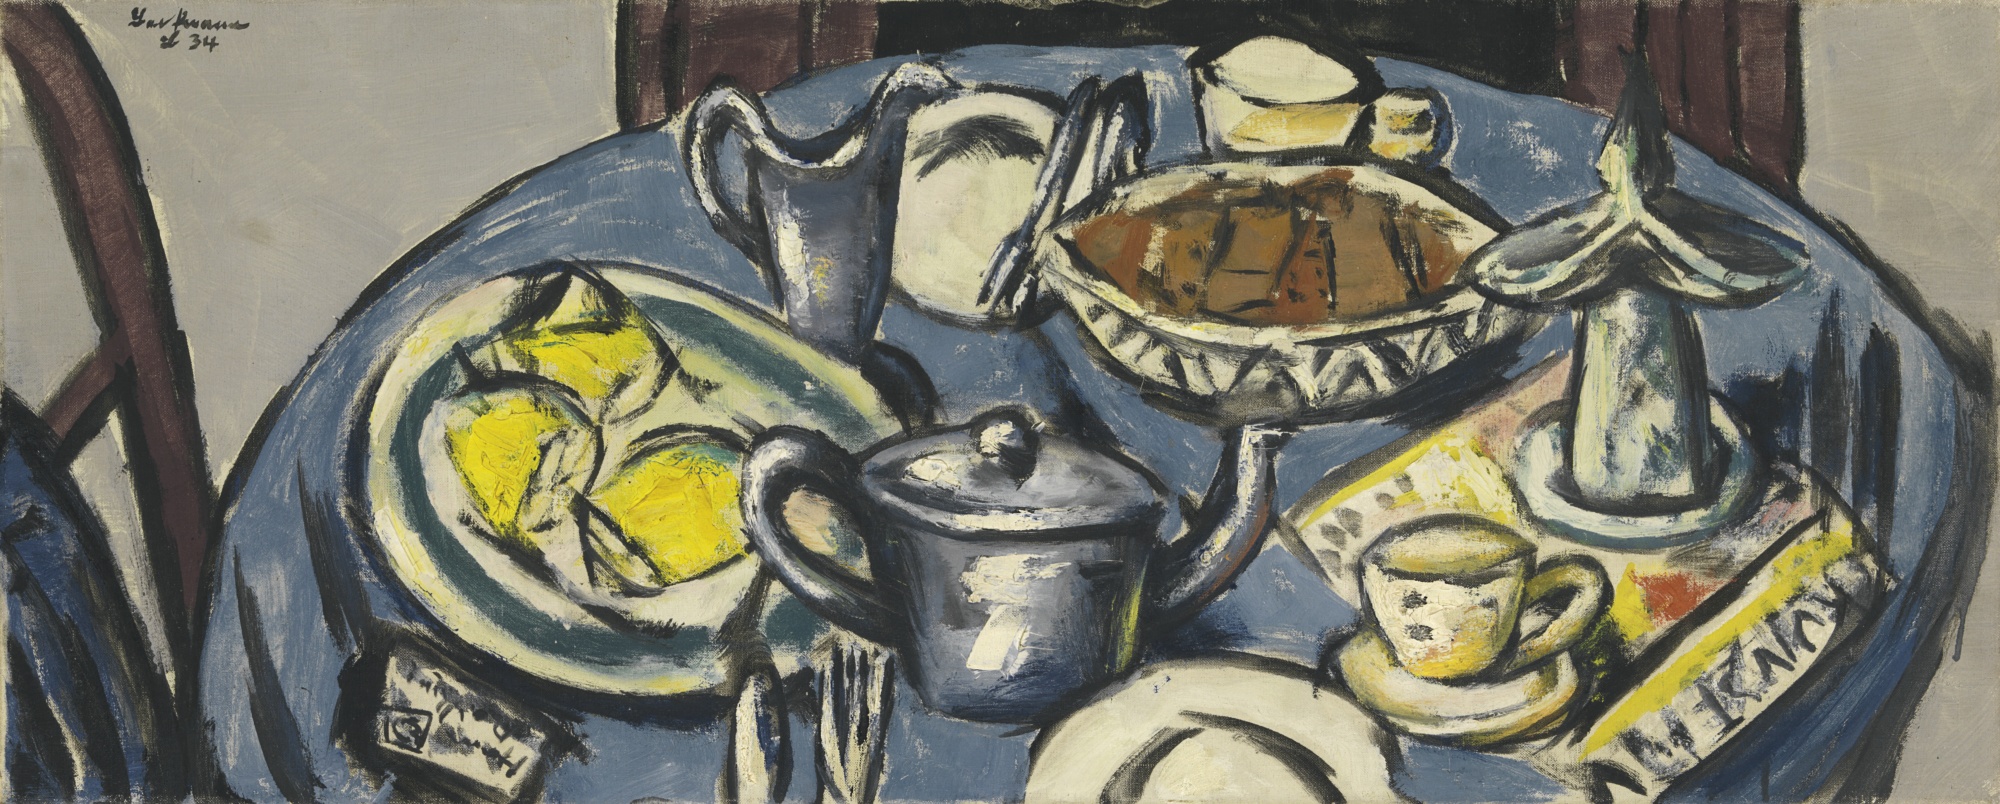 M Beckmann - La mesa del desayuno azul 1934